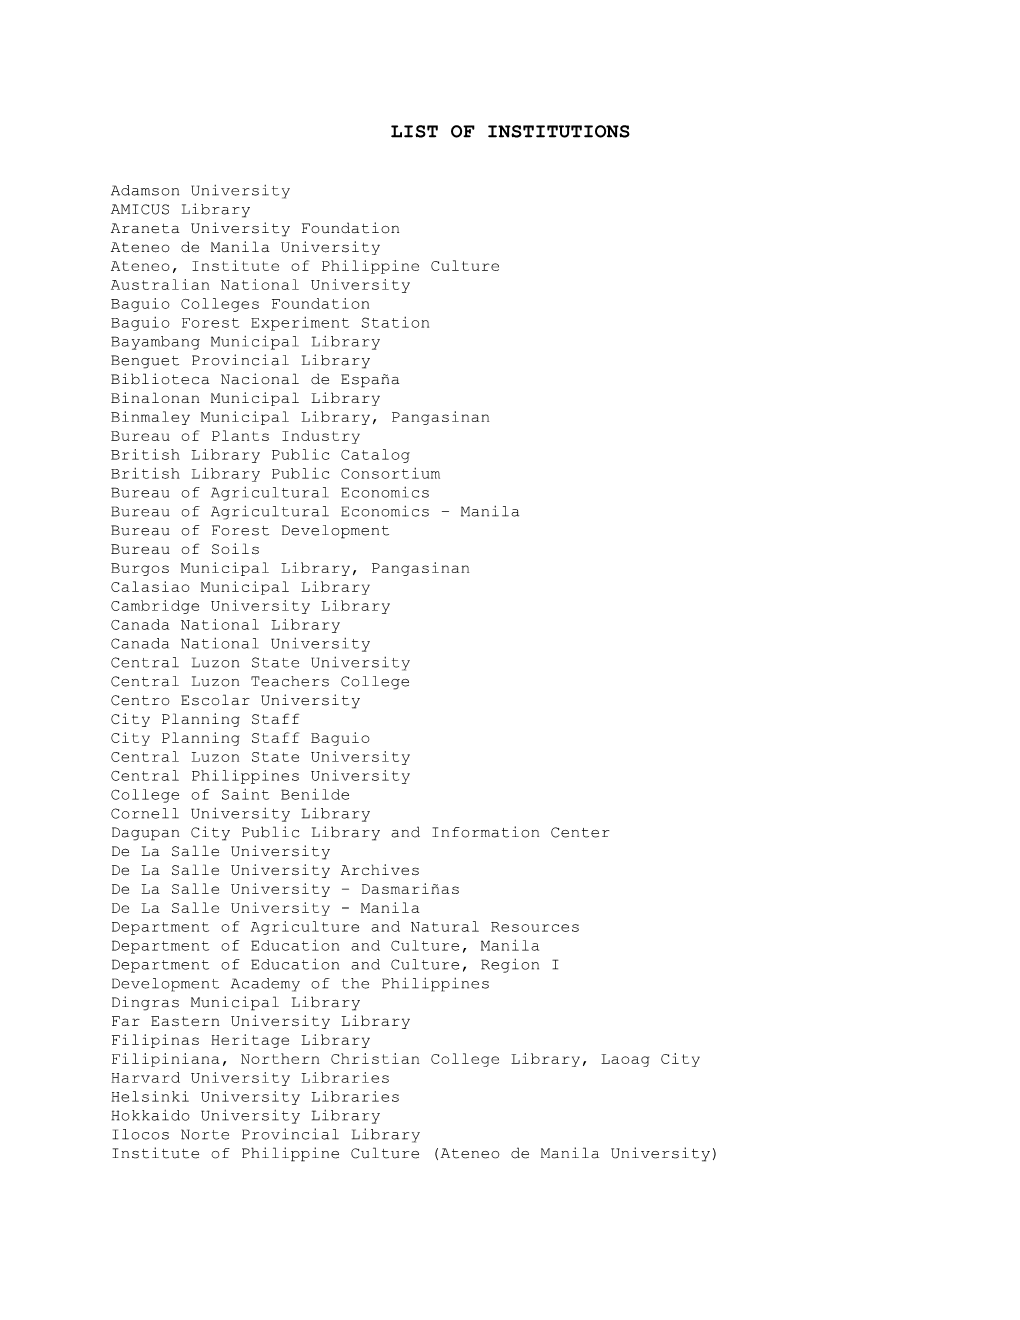 List of Institutions (Pdf/10Kb)